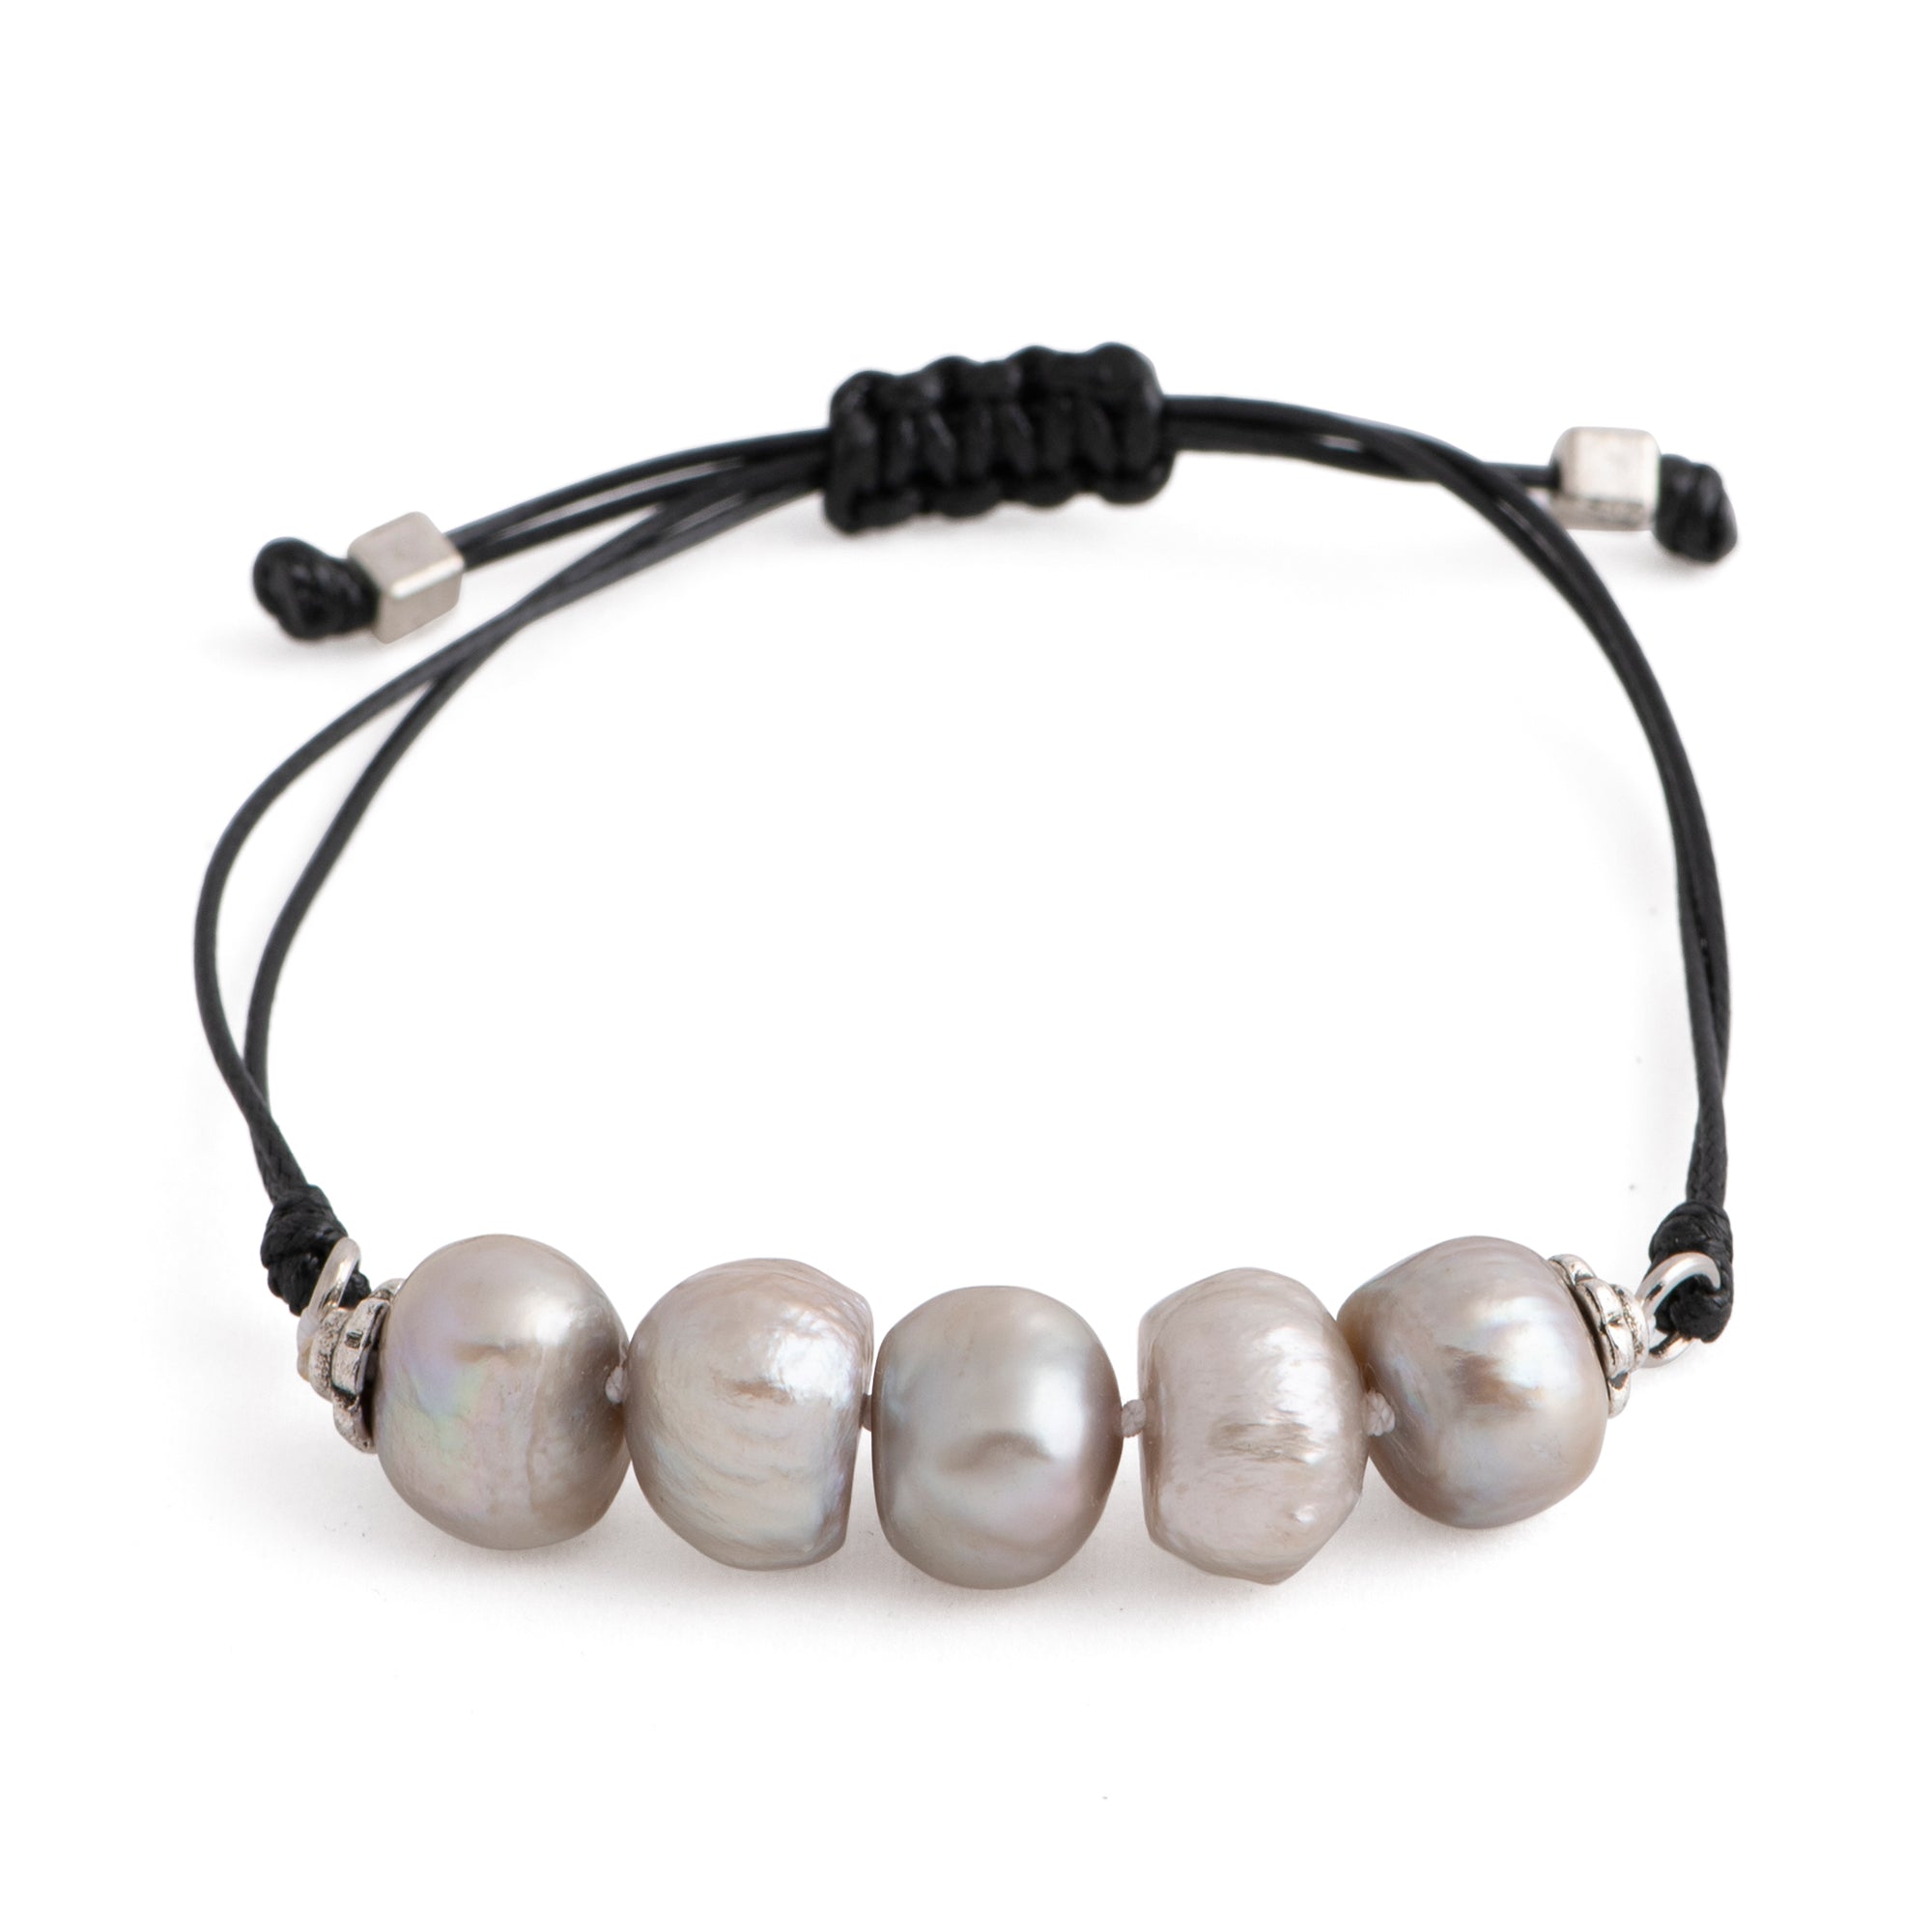 Aegean - Five Freshwater Pearl Adjustable String Bracelet - The